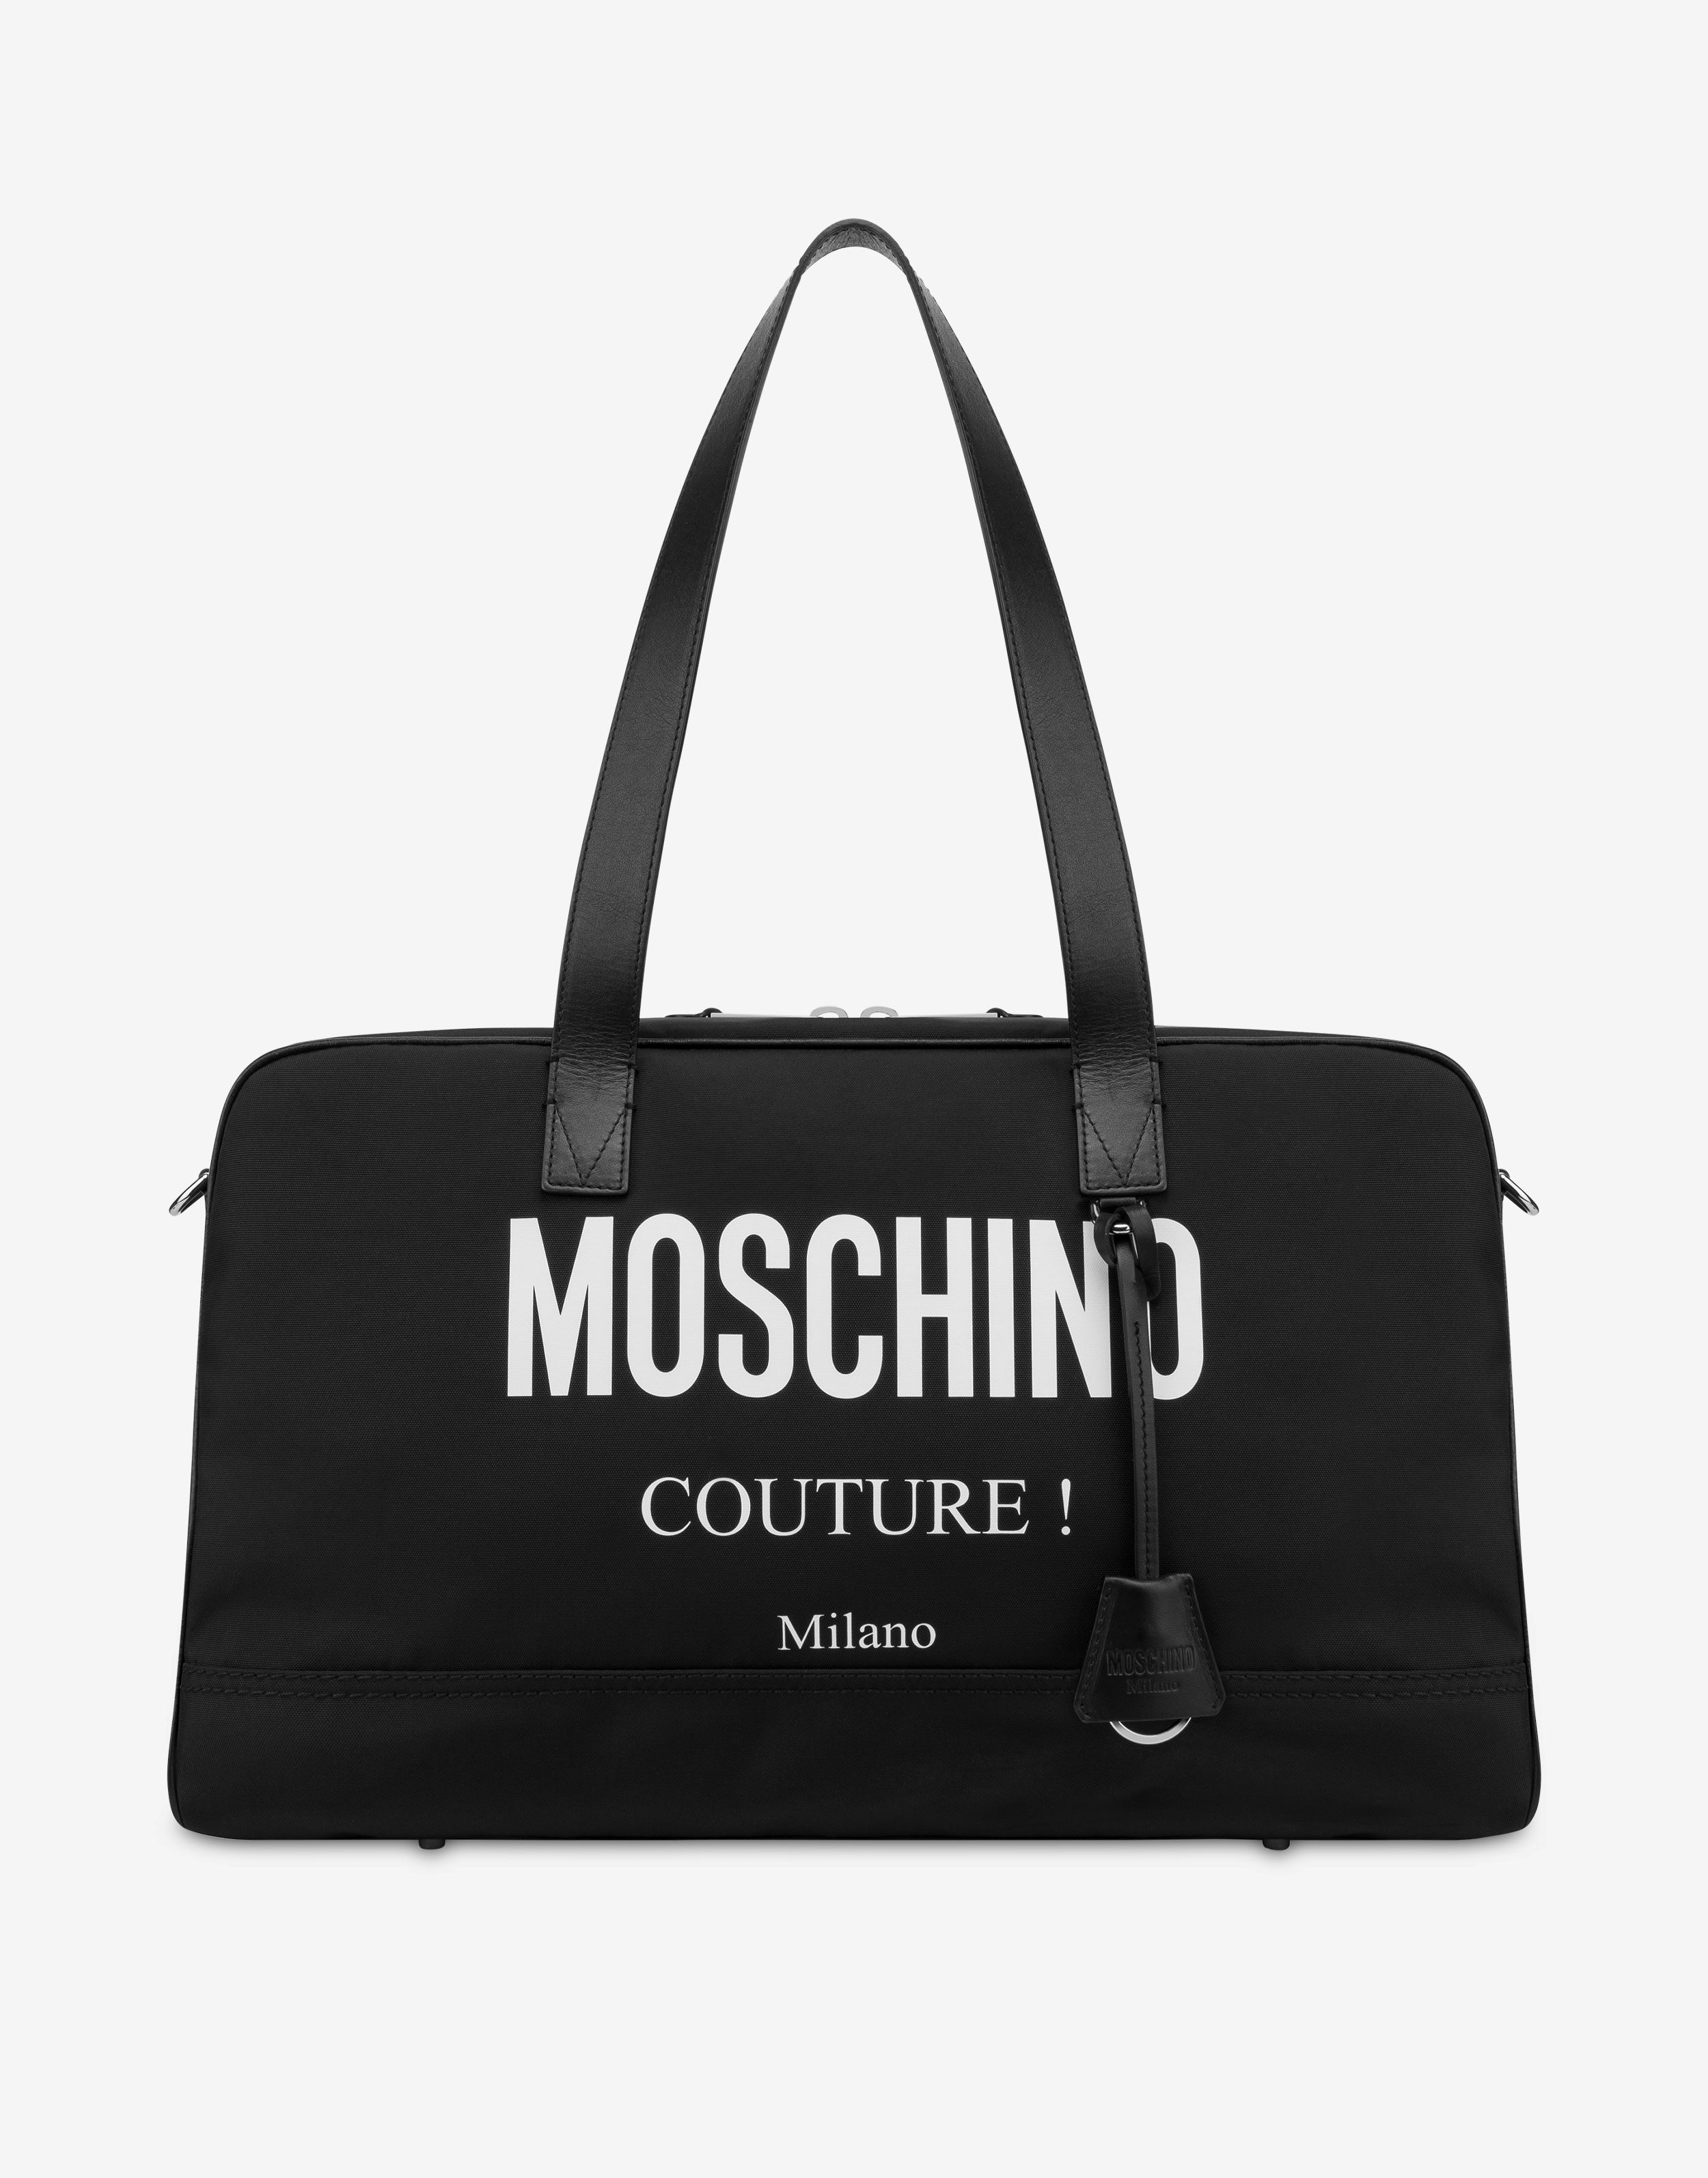 Moschino Couture nylon travel bag